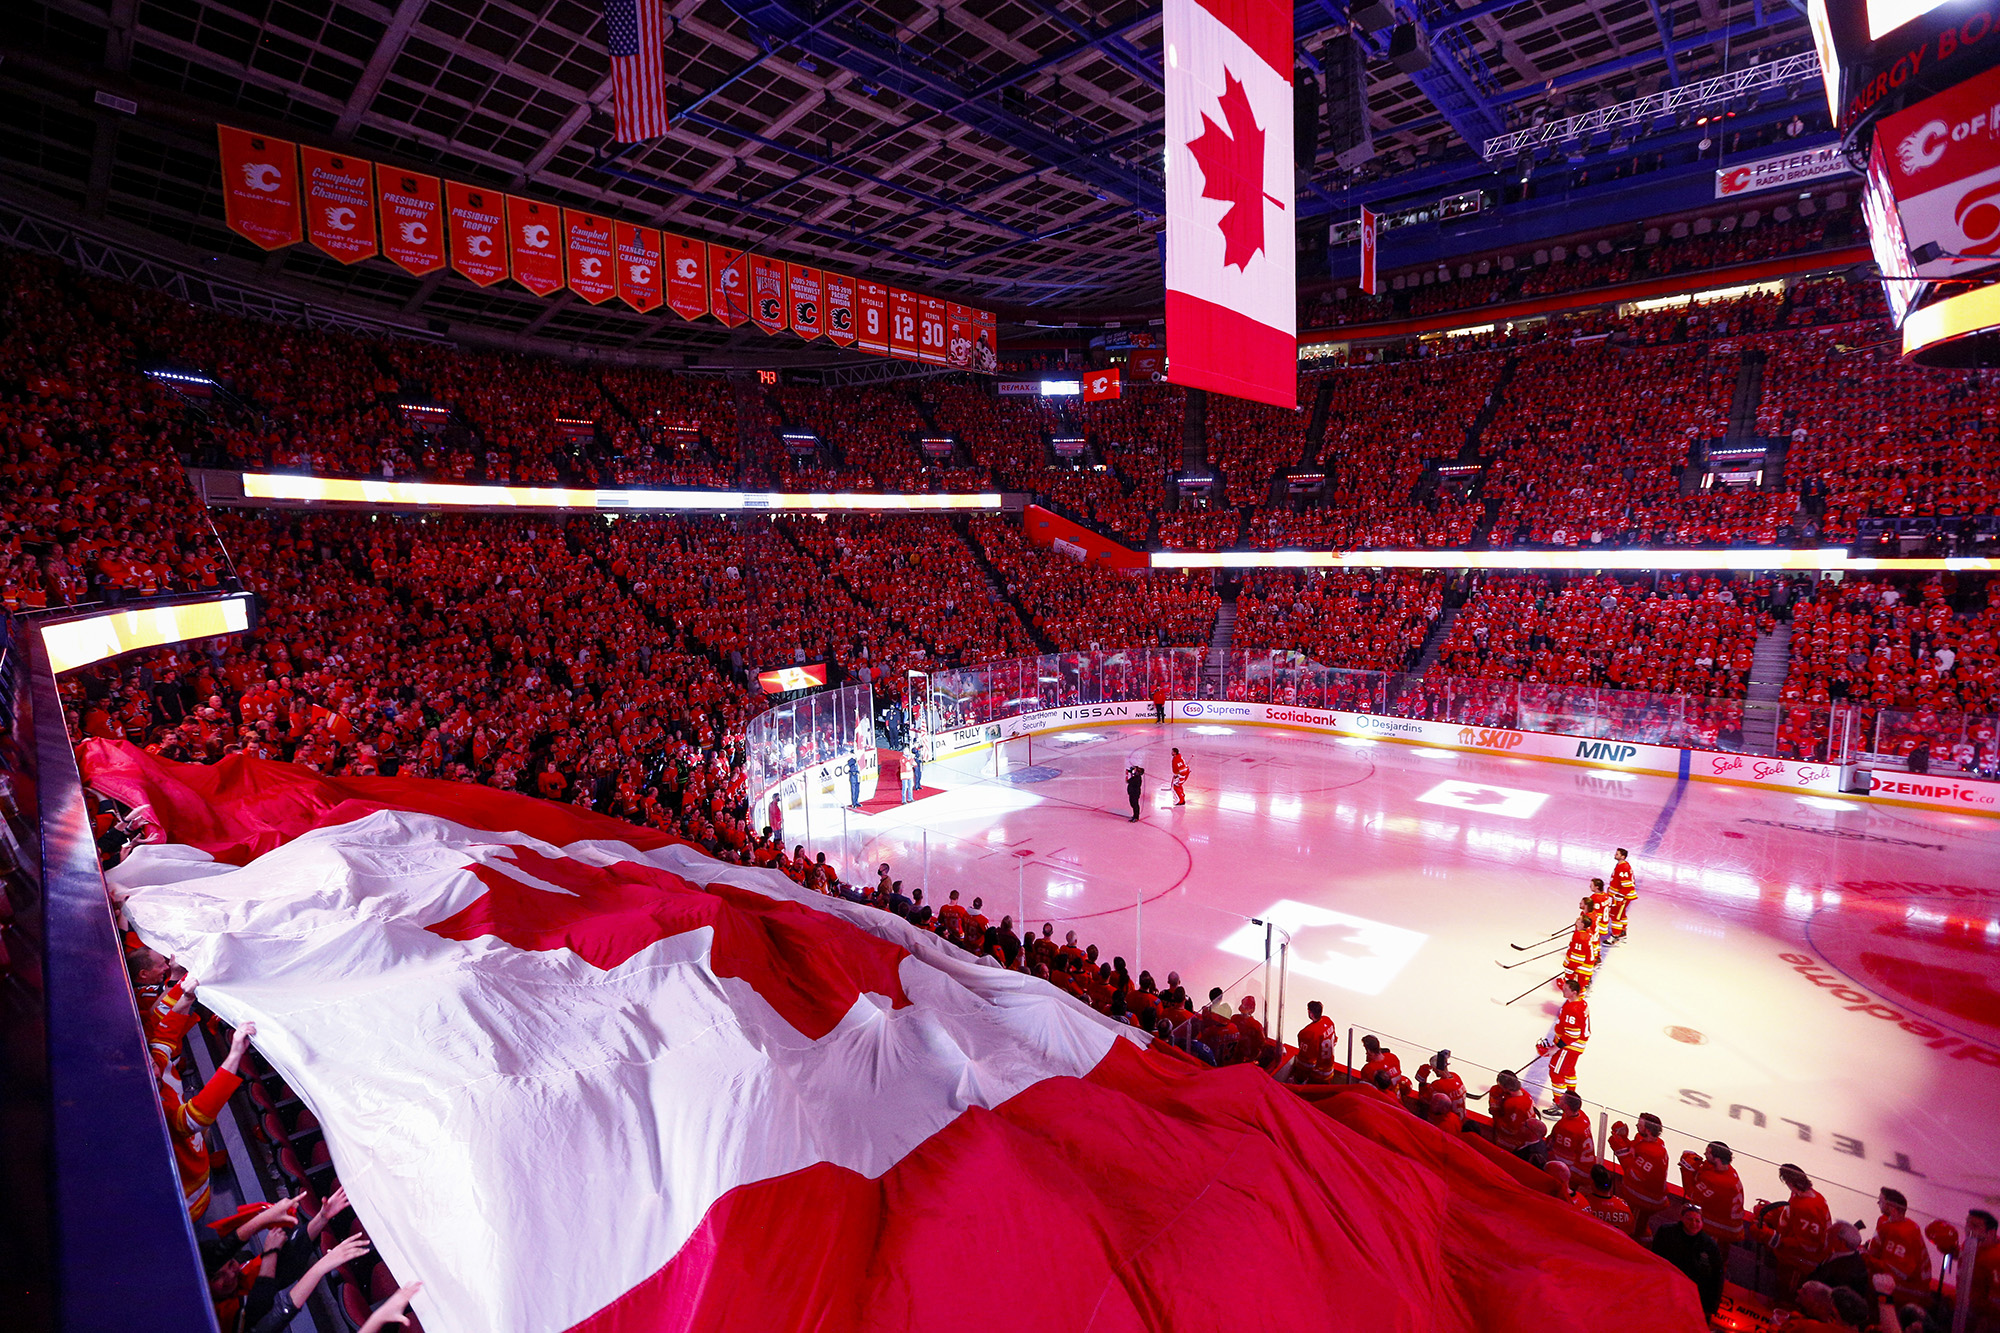 Calgary Flames on X: 𝙃𝙊𝙇𝙔 𝙈𝙊𝙇𝙔! #NHLAllStarVote Tyler